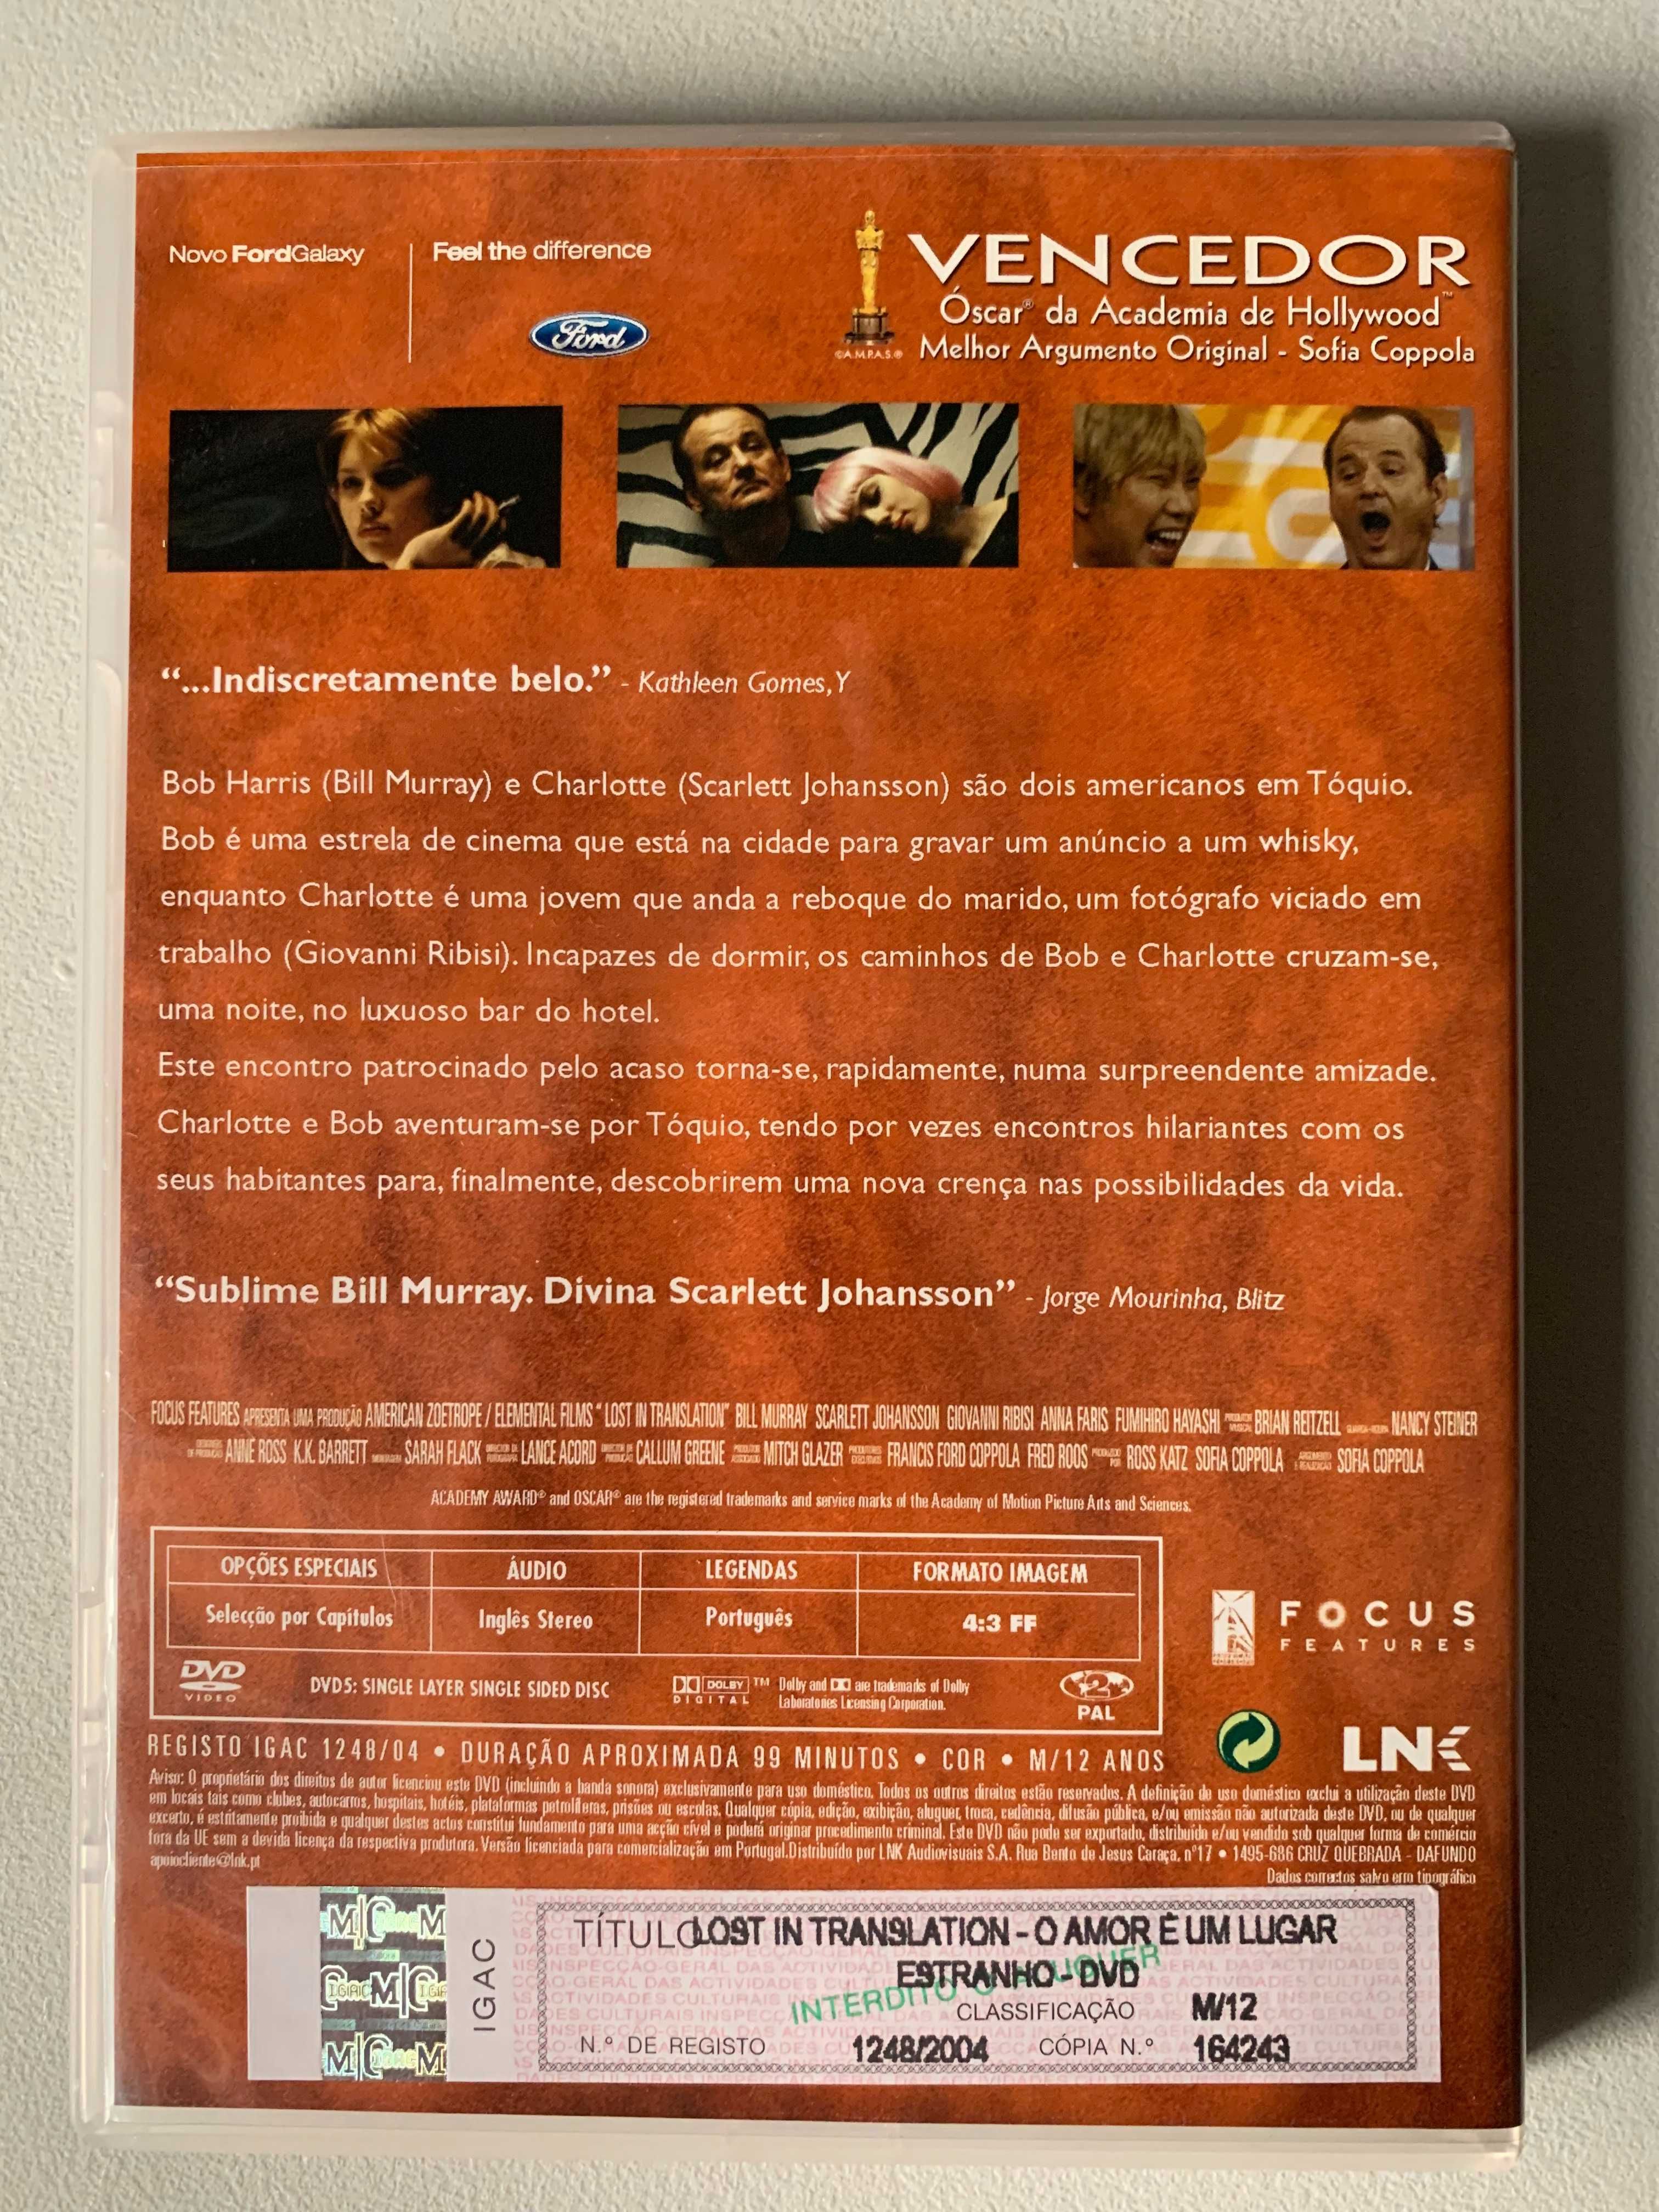 [DVD] Lost In Translation